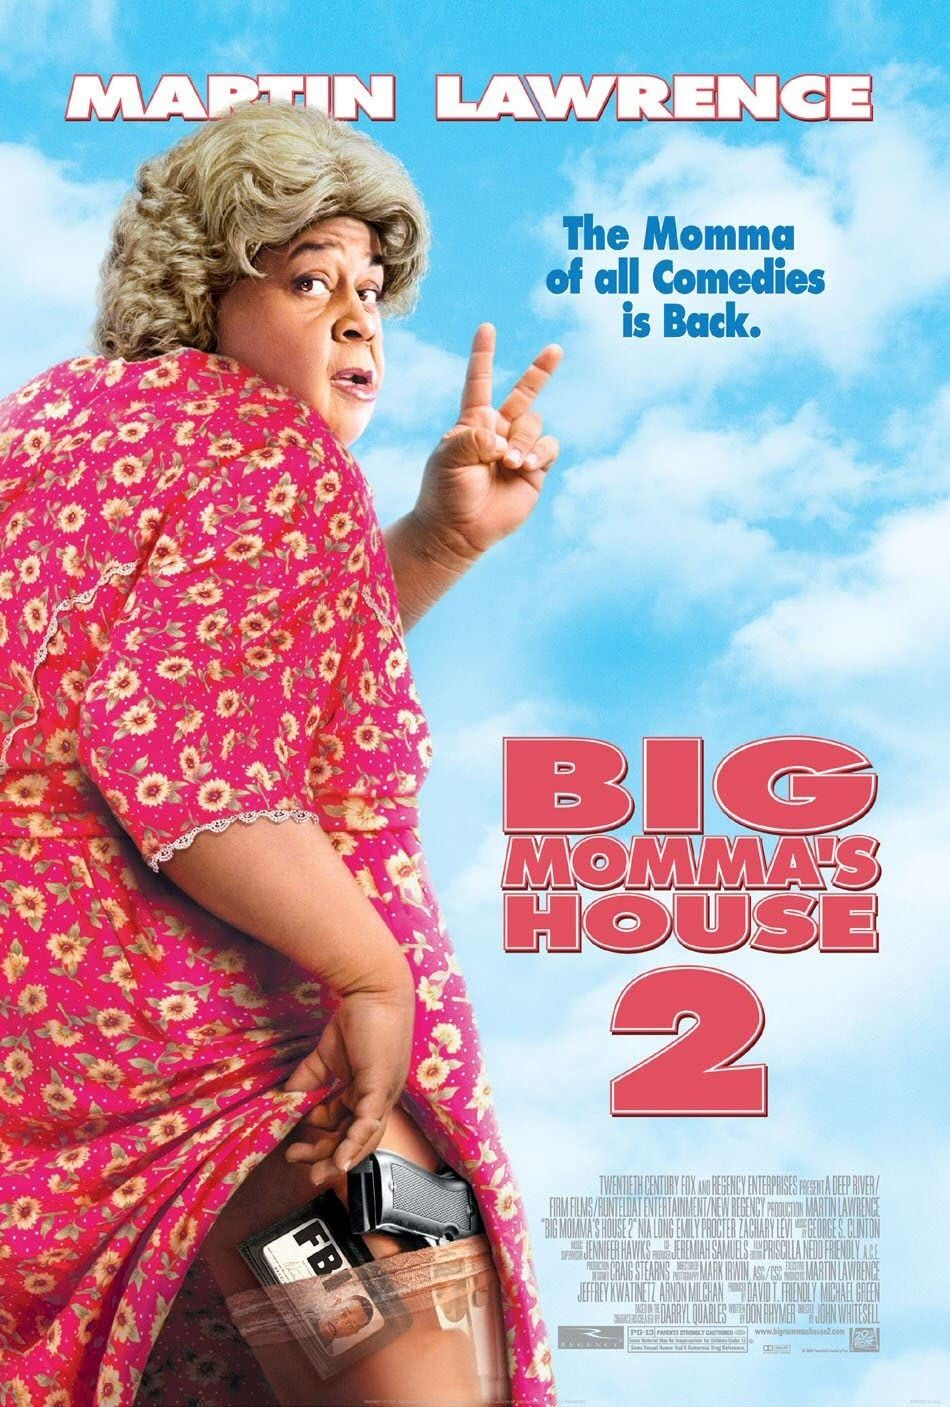 Big Mommas House 2 (2006) Hindi Dubbed BRRip download full movie